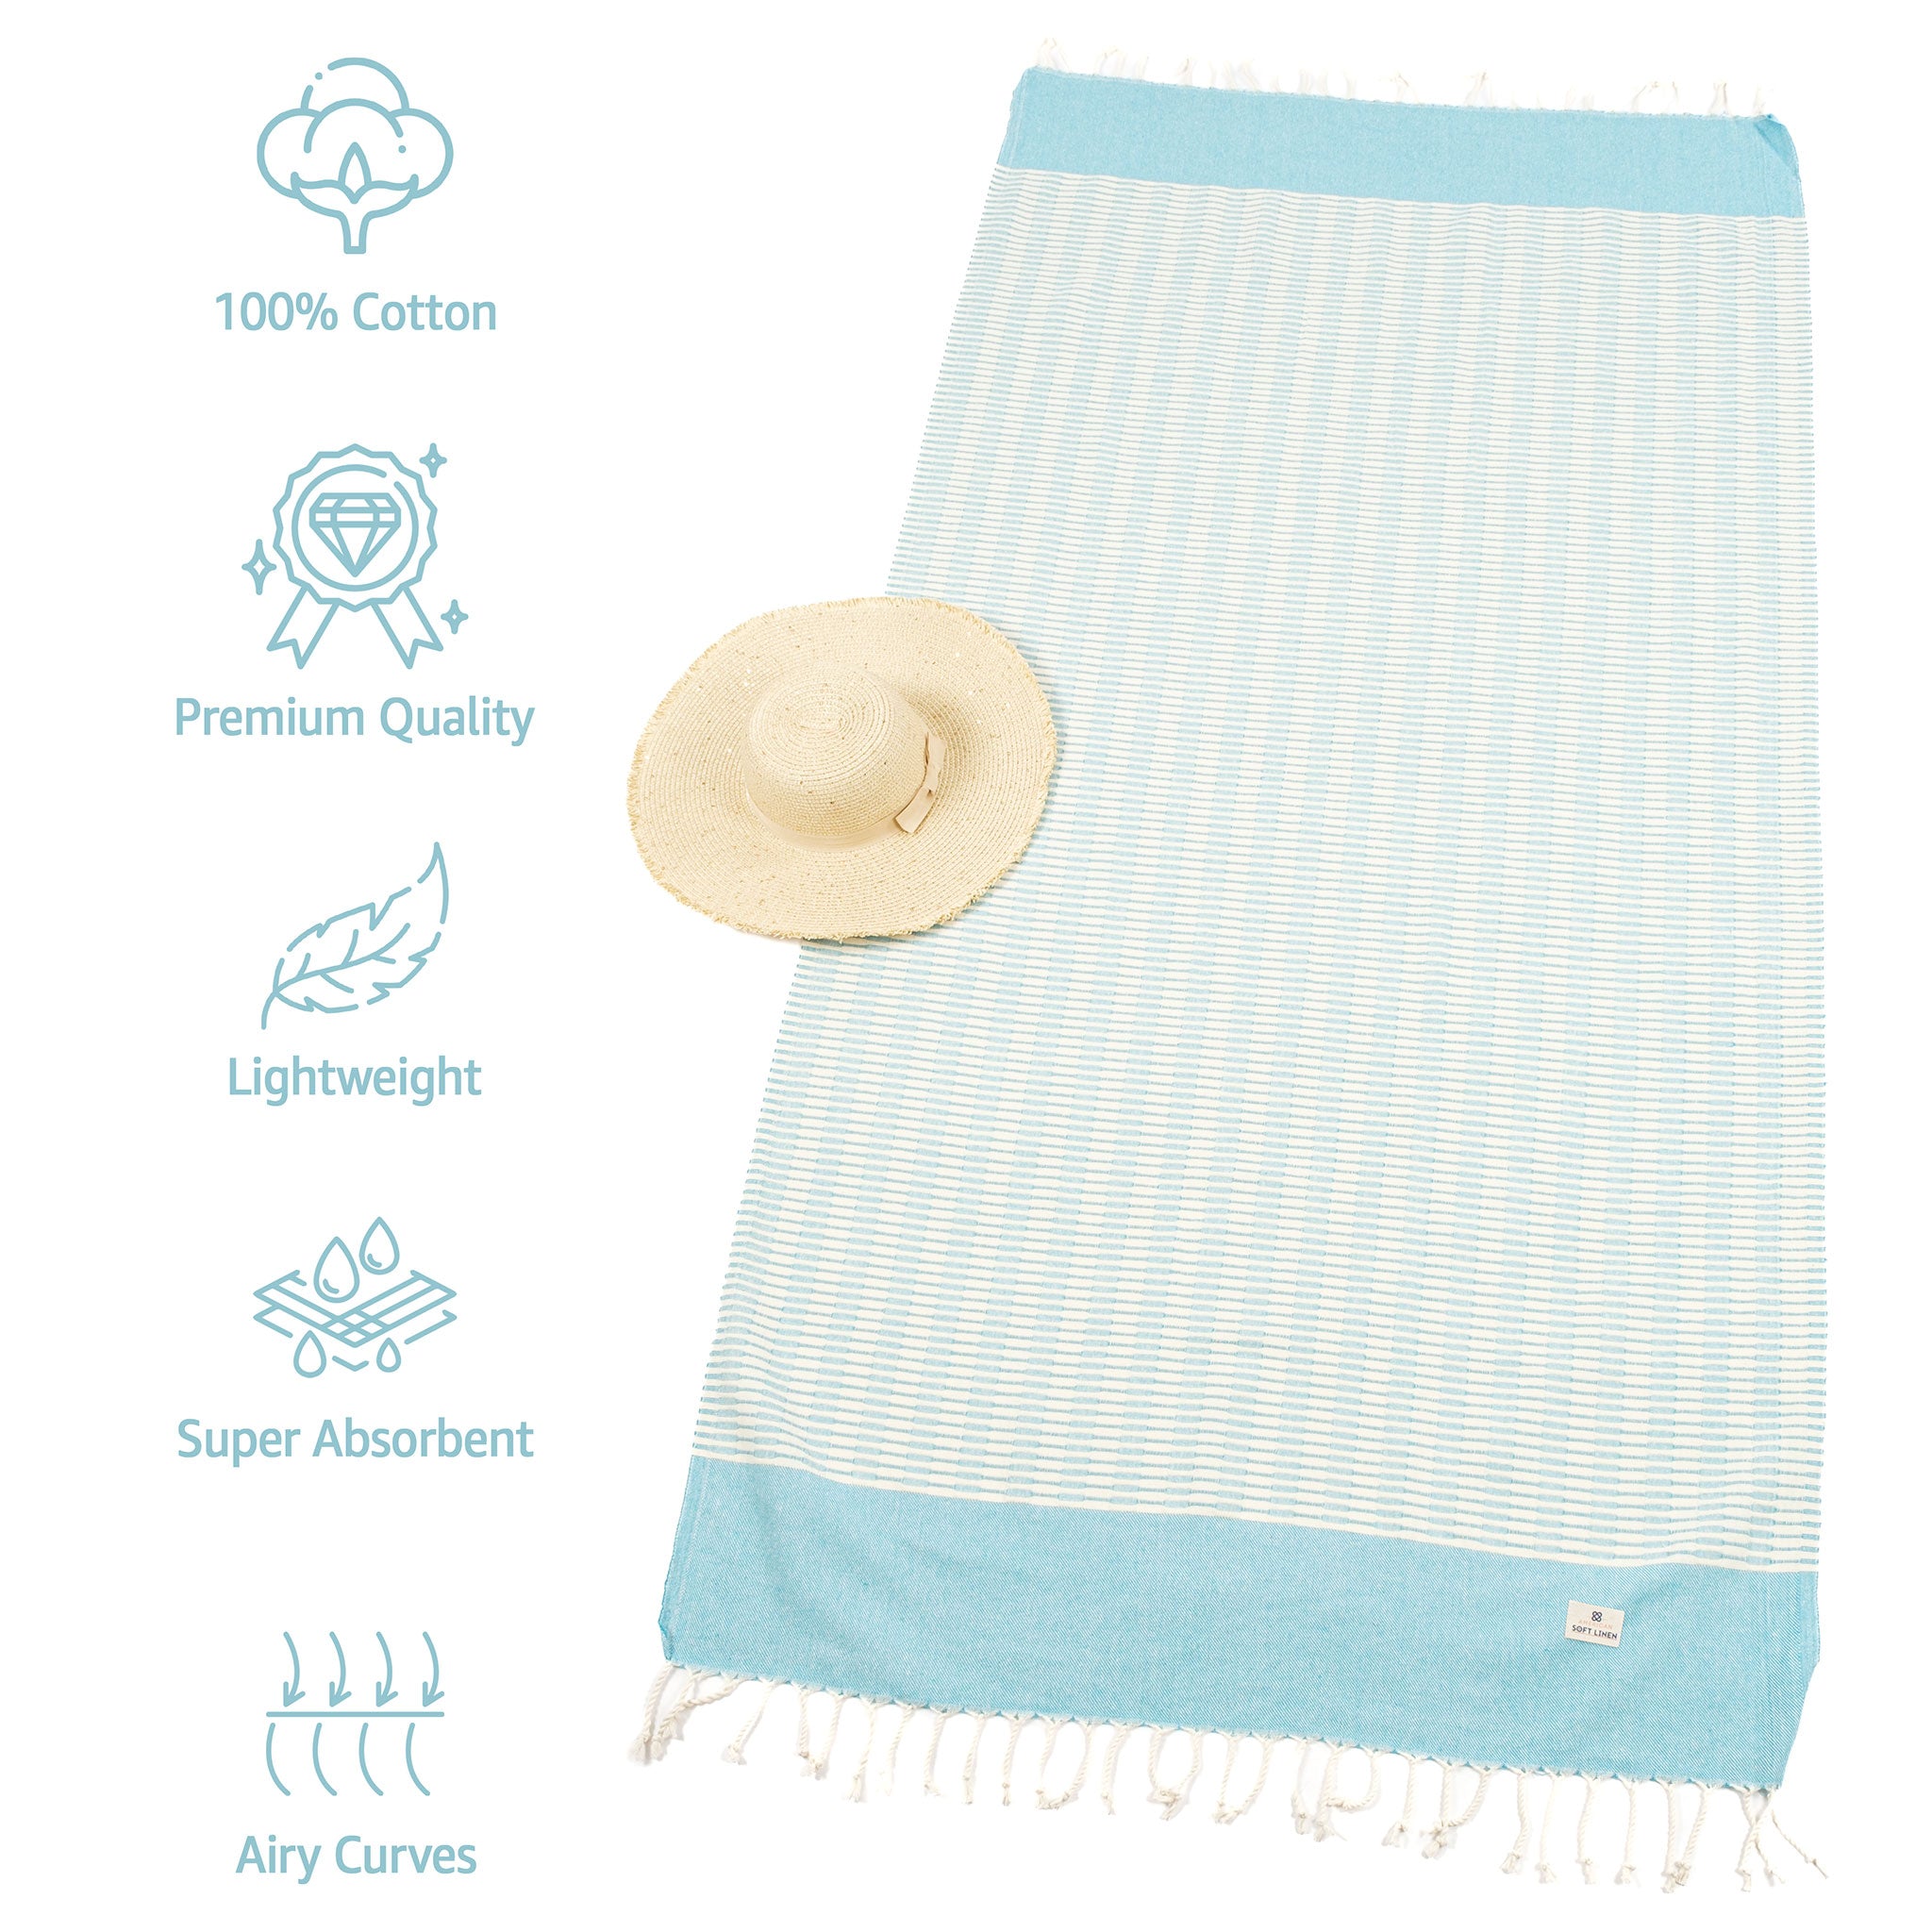 American Soft Linen - 100% Cotton Turkish Peshtemal Towels 40x70 Inches - Turquoise - 3